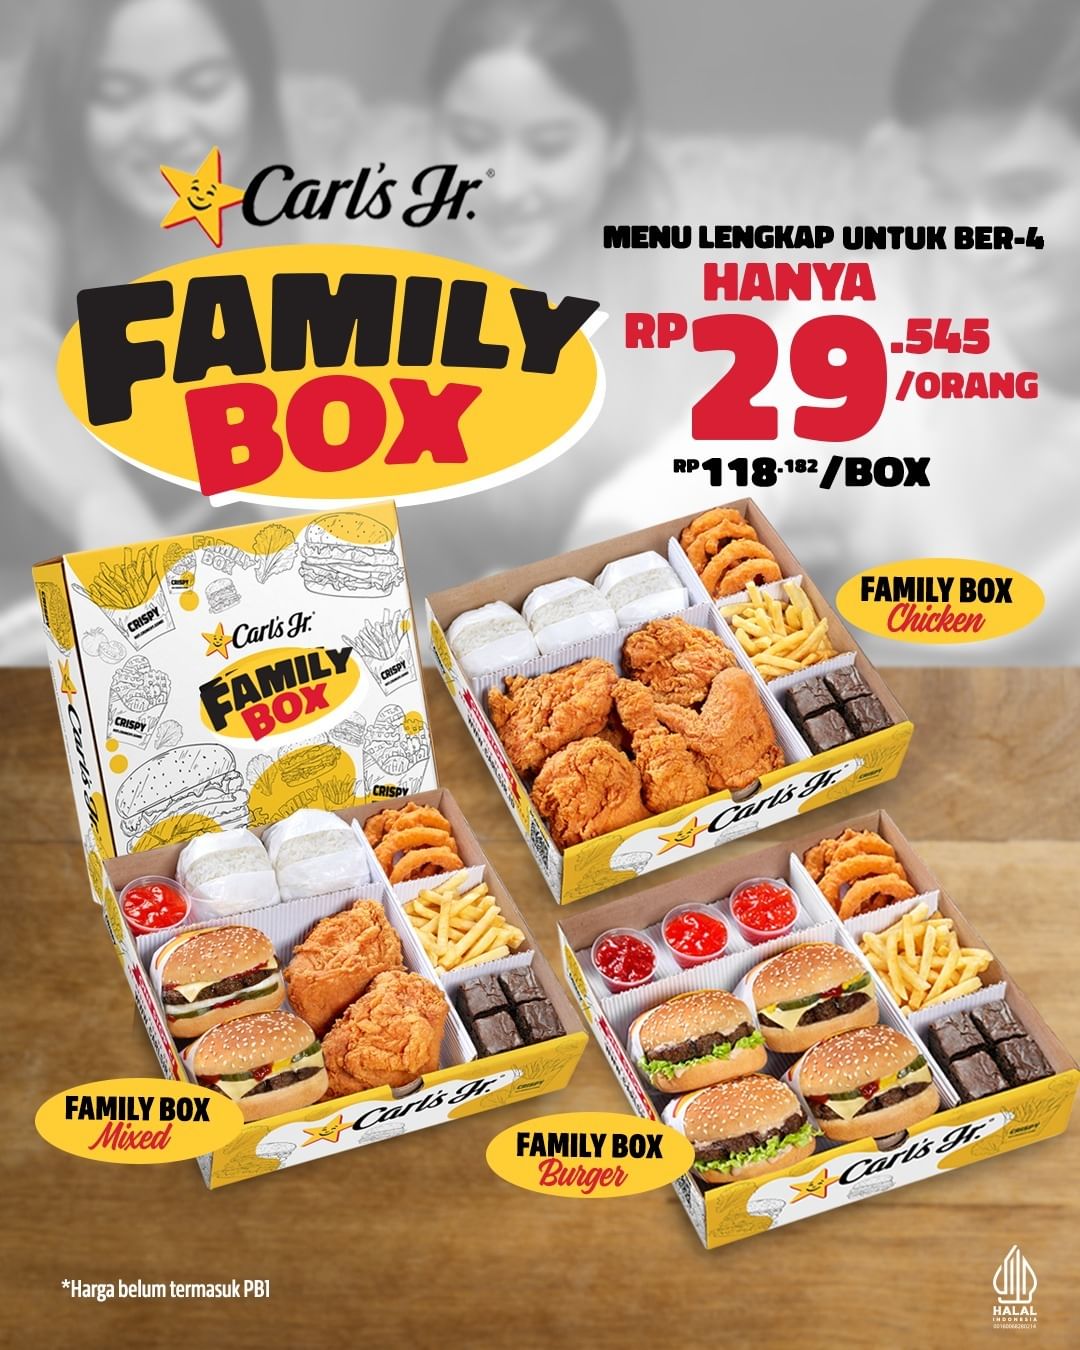 CARL'S JR Promo FAMILY BOX - Hanya Rp. 118.182 Paket 3 – 4 Orang